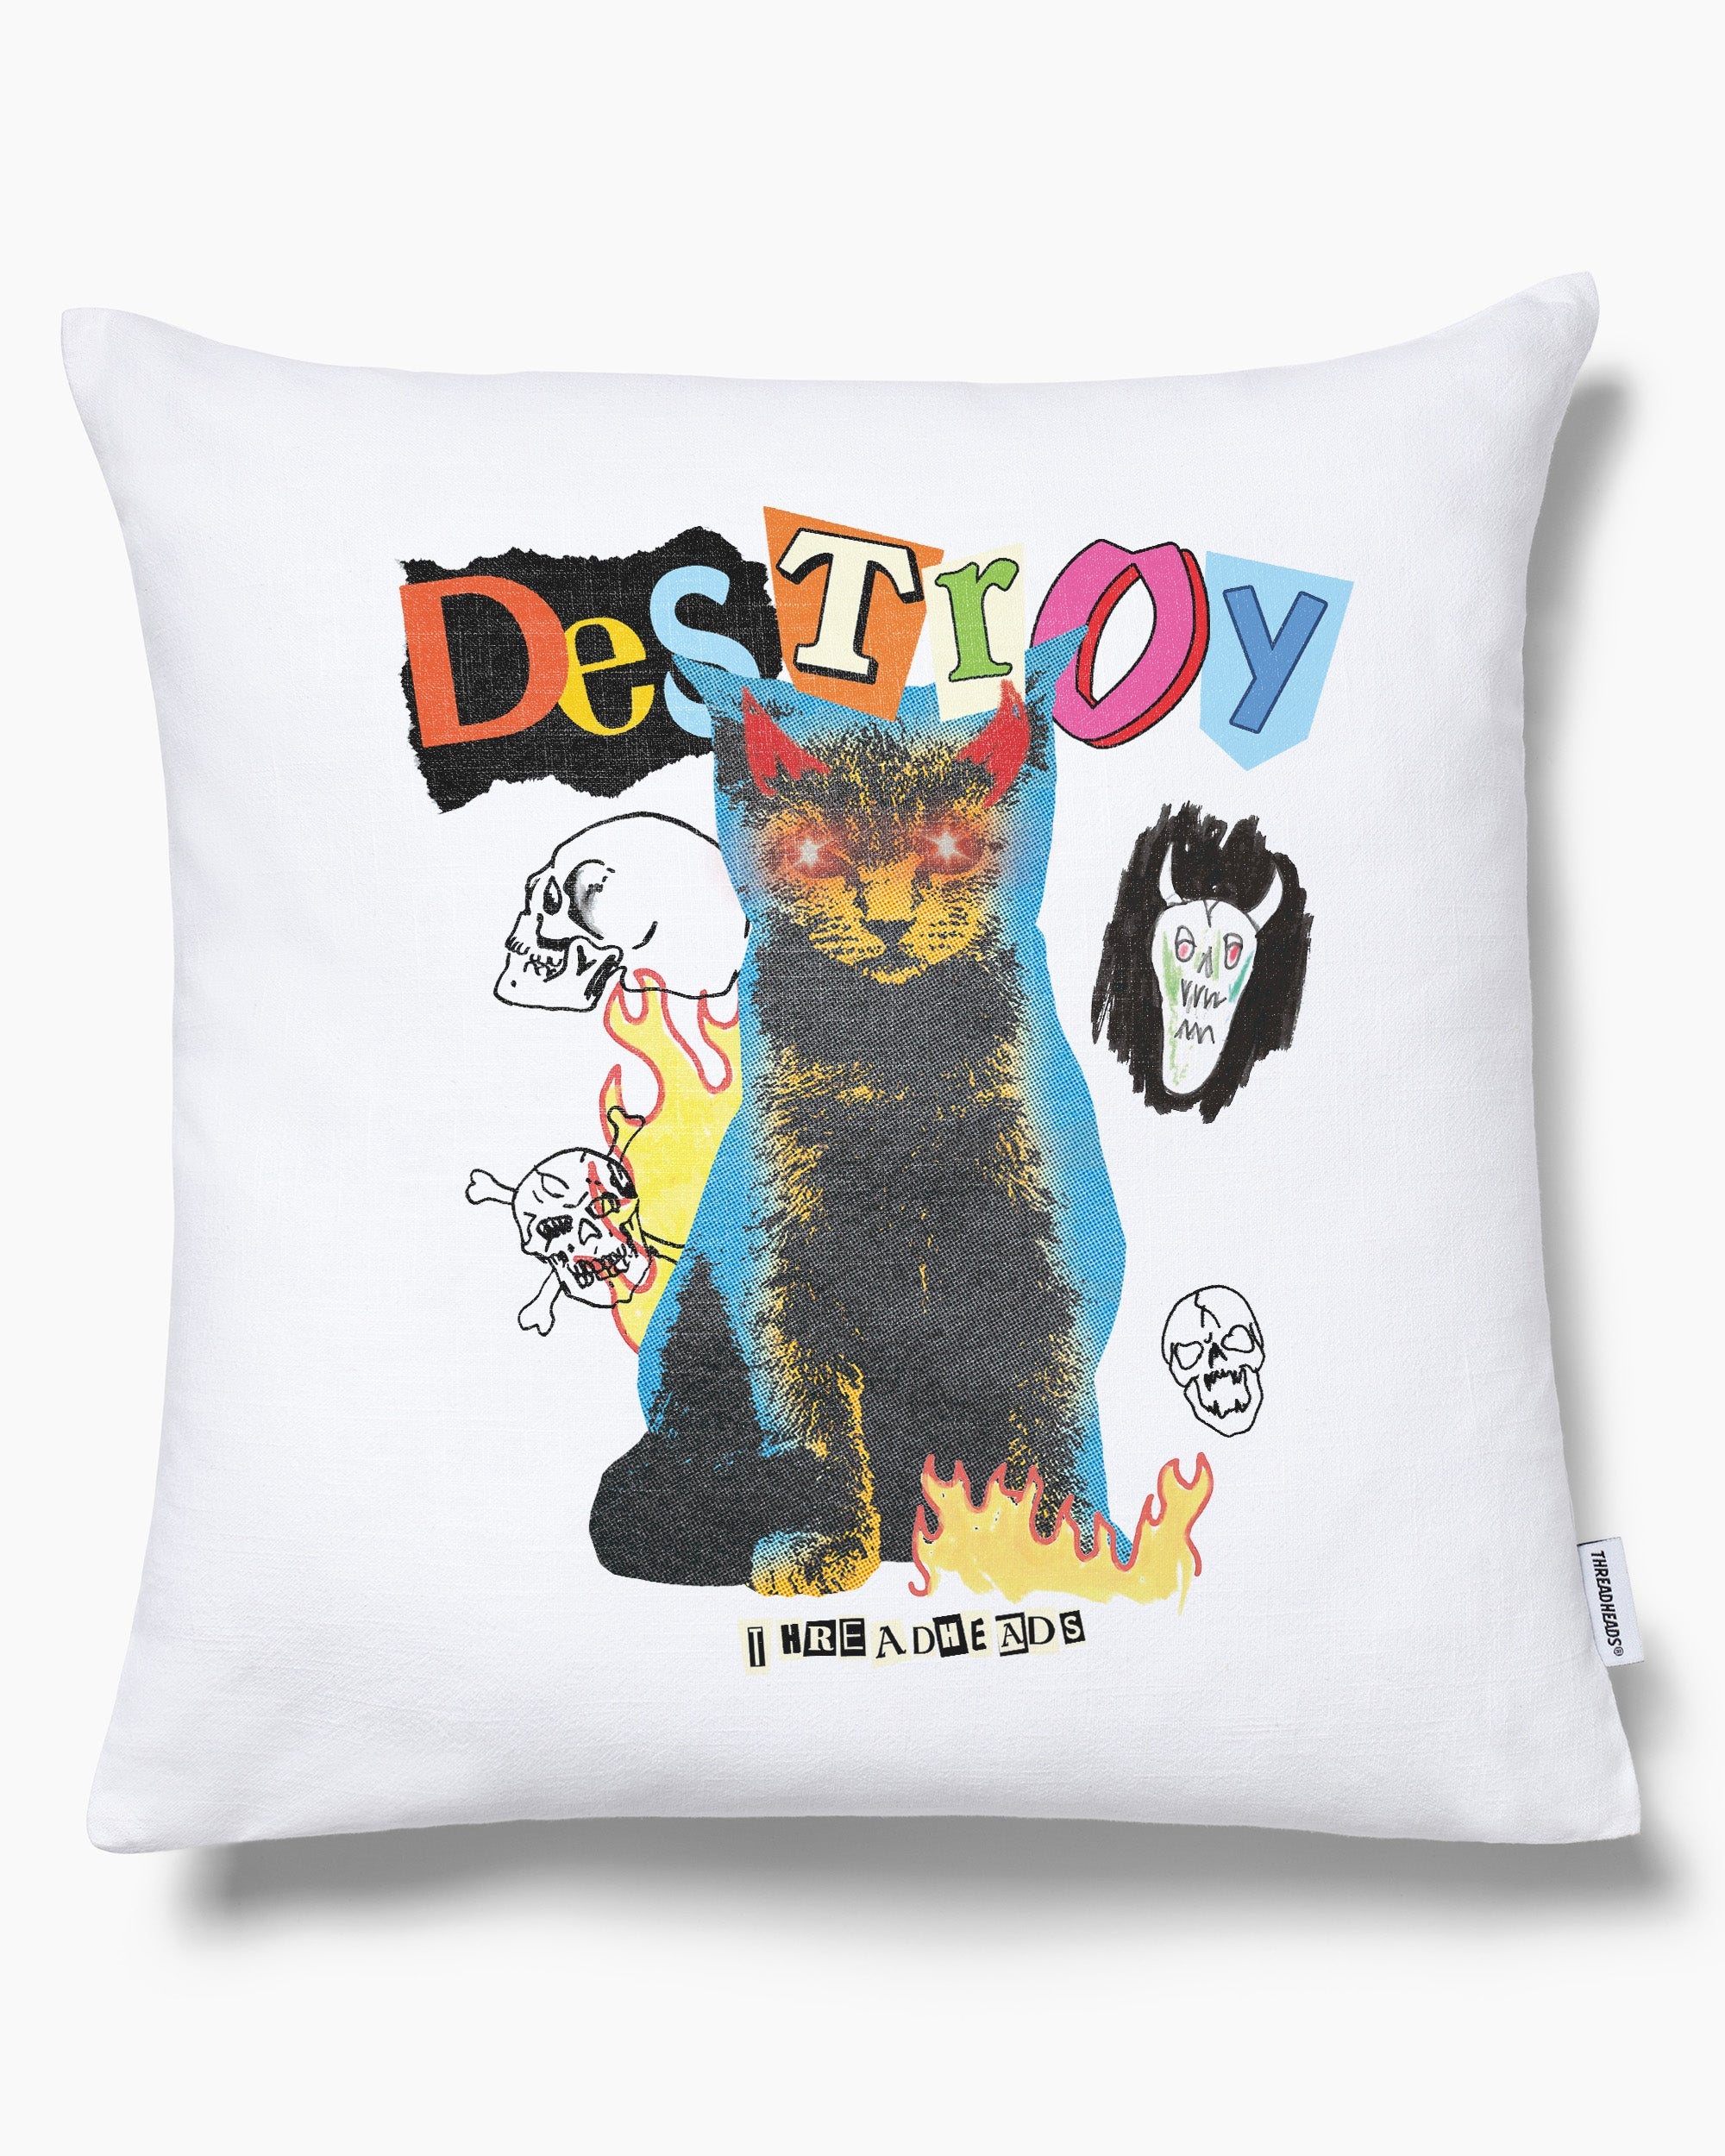 Destroy Cat Cushion Australia Online White